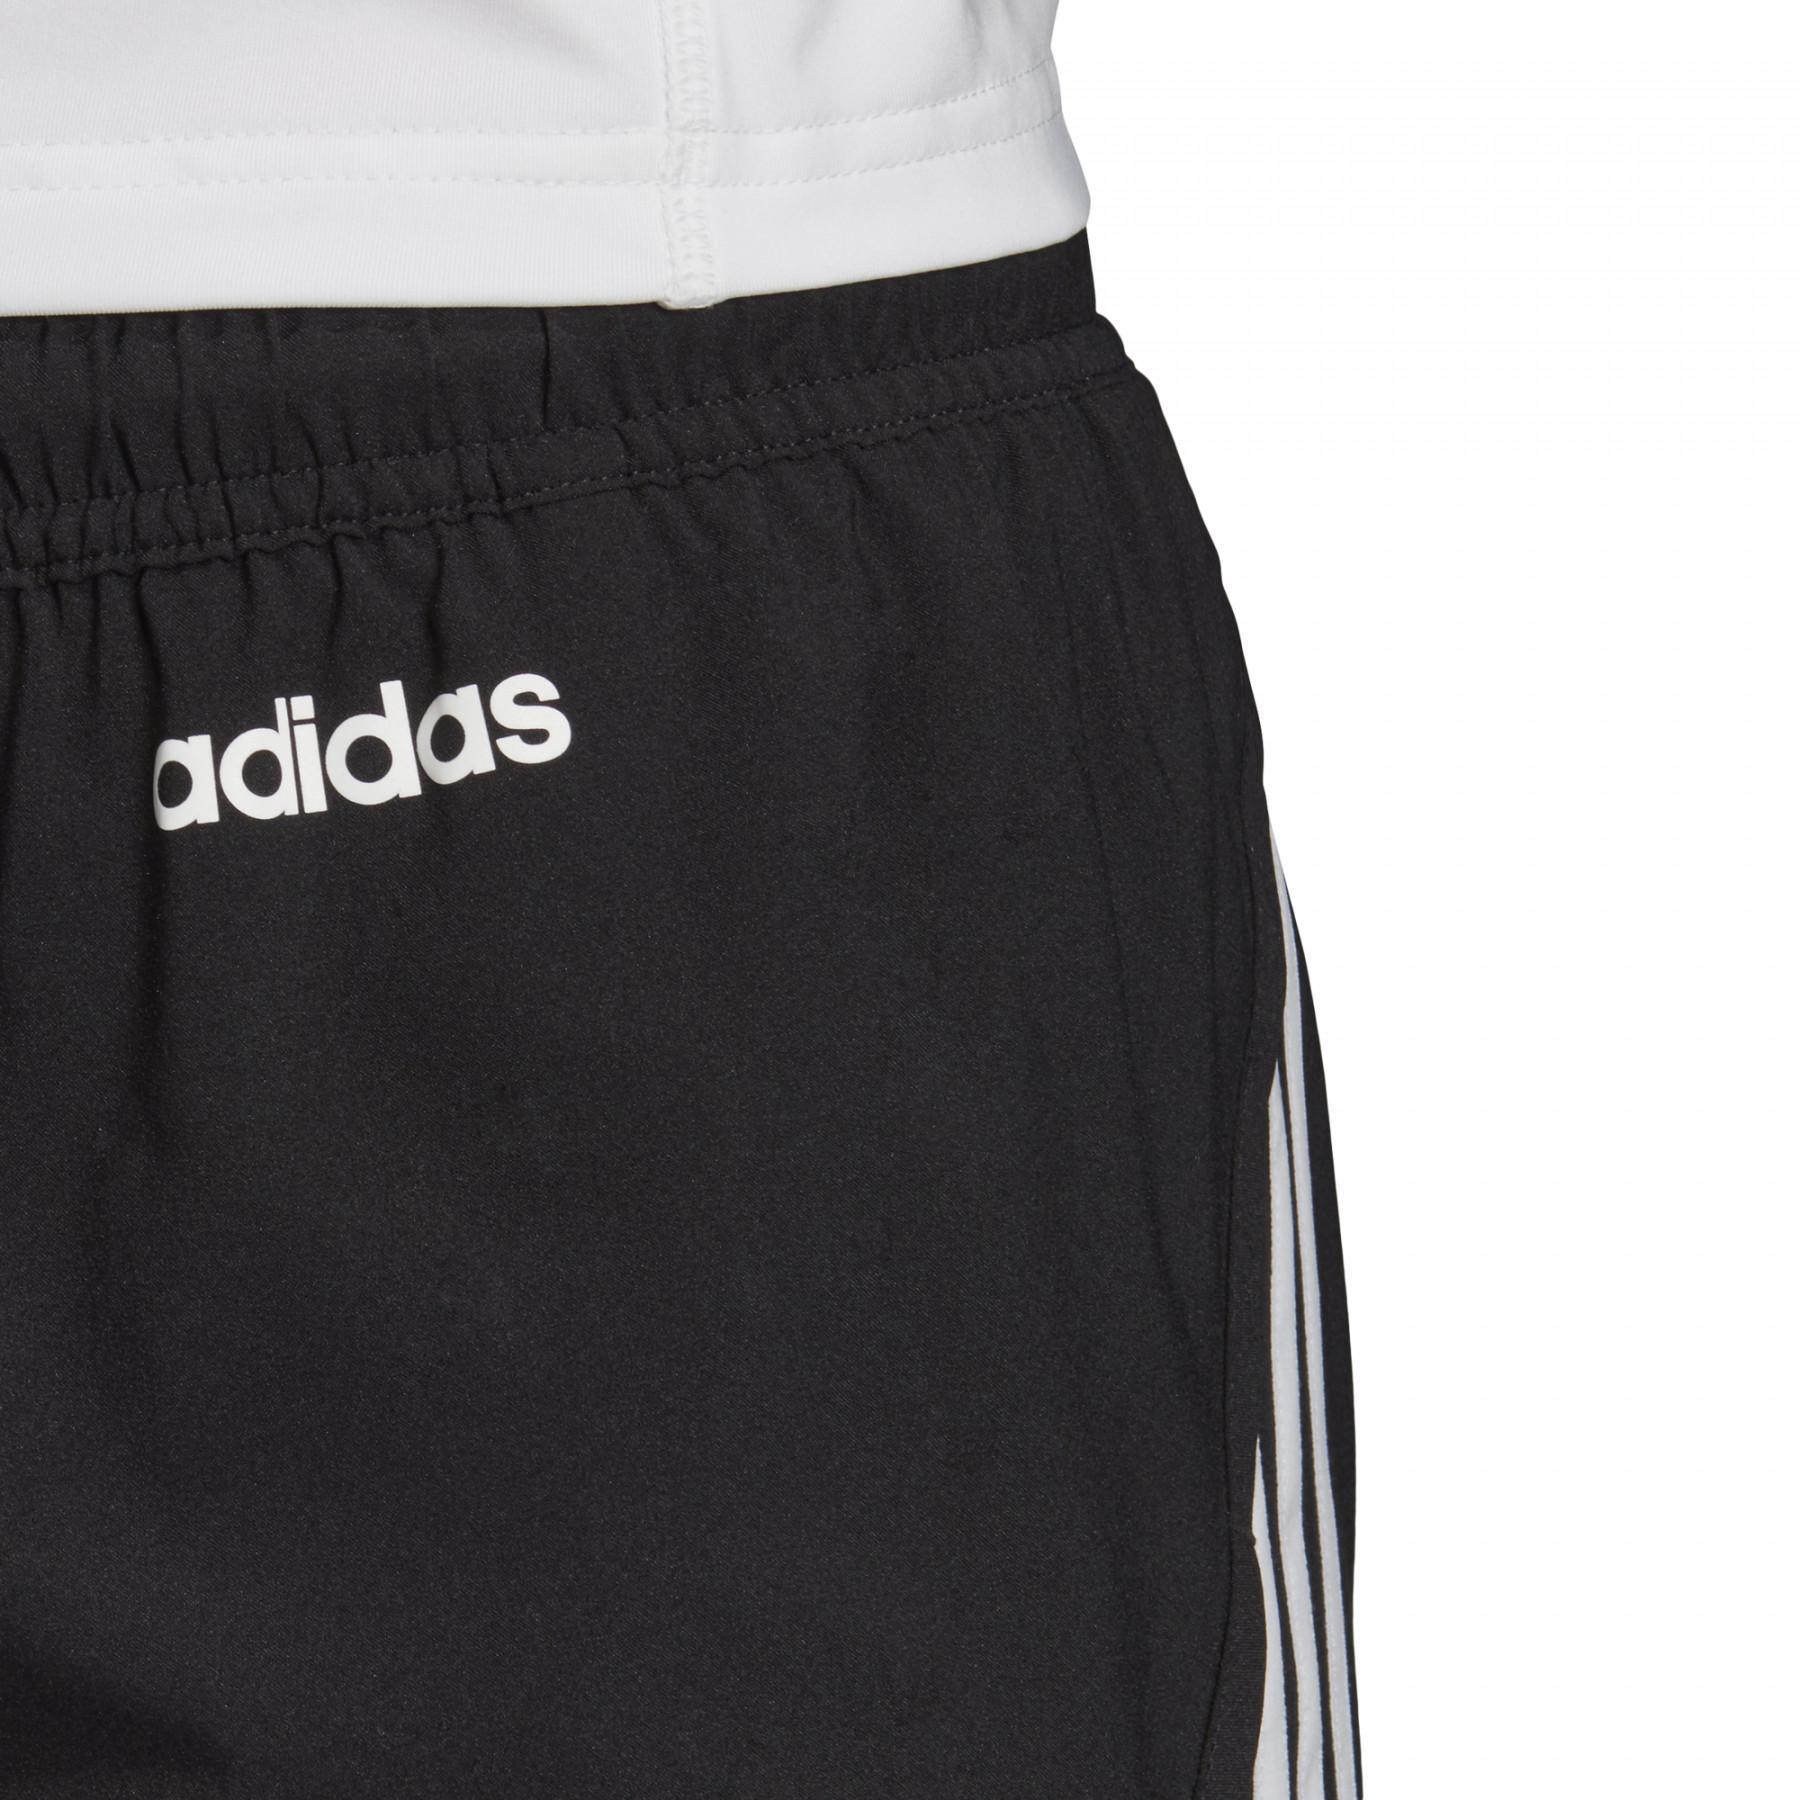 Damen-Shorts adidas Designed 2 Move 3-Stripes